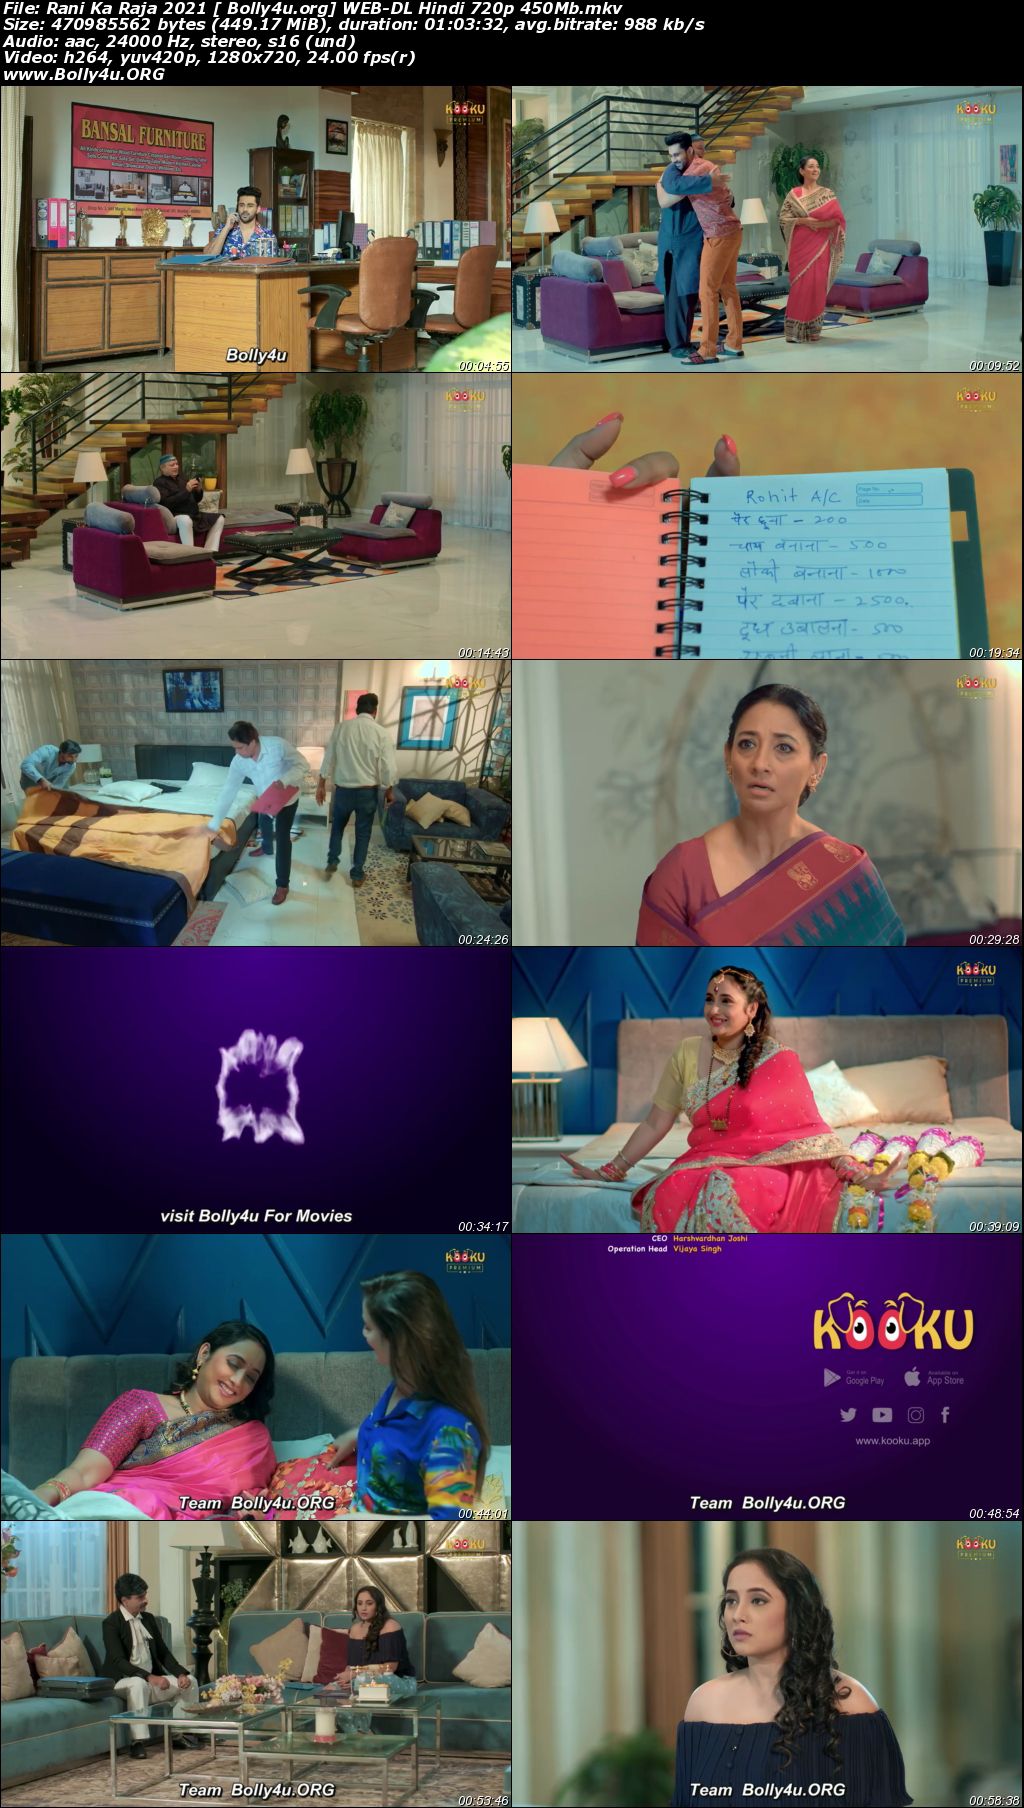 Rani Ka Raja 2021 WEB-DL 450Mb Hindi S01 KooKu 720p Download